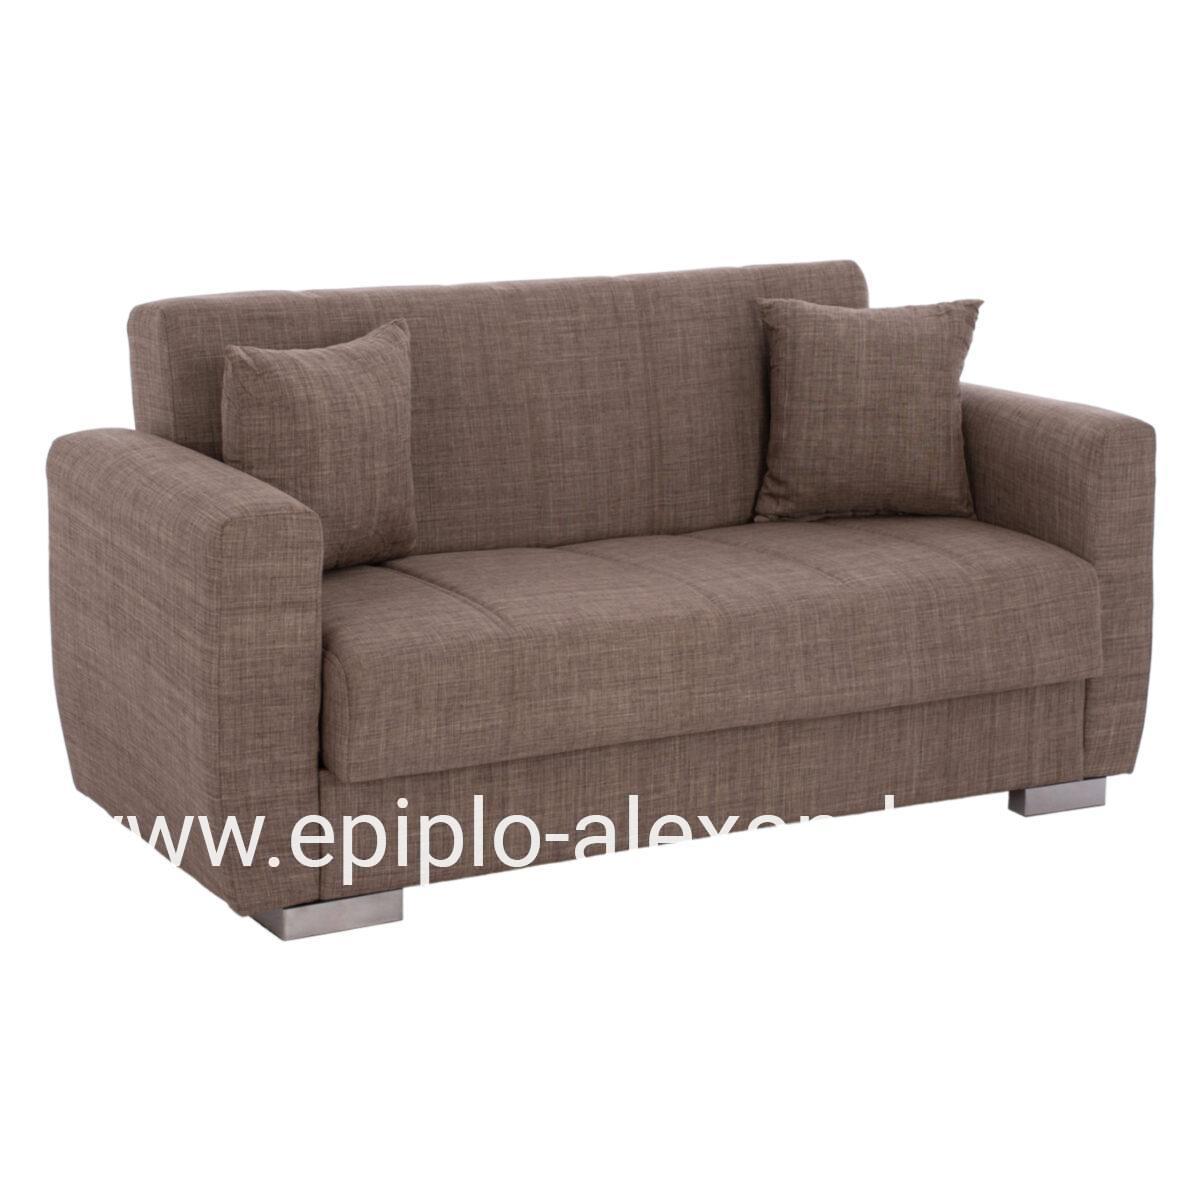 HM3241.02 sofa-bed